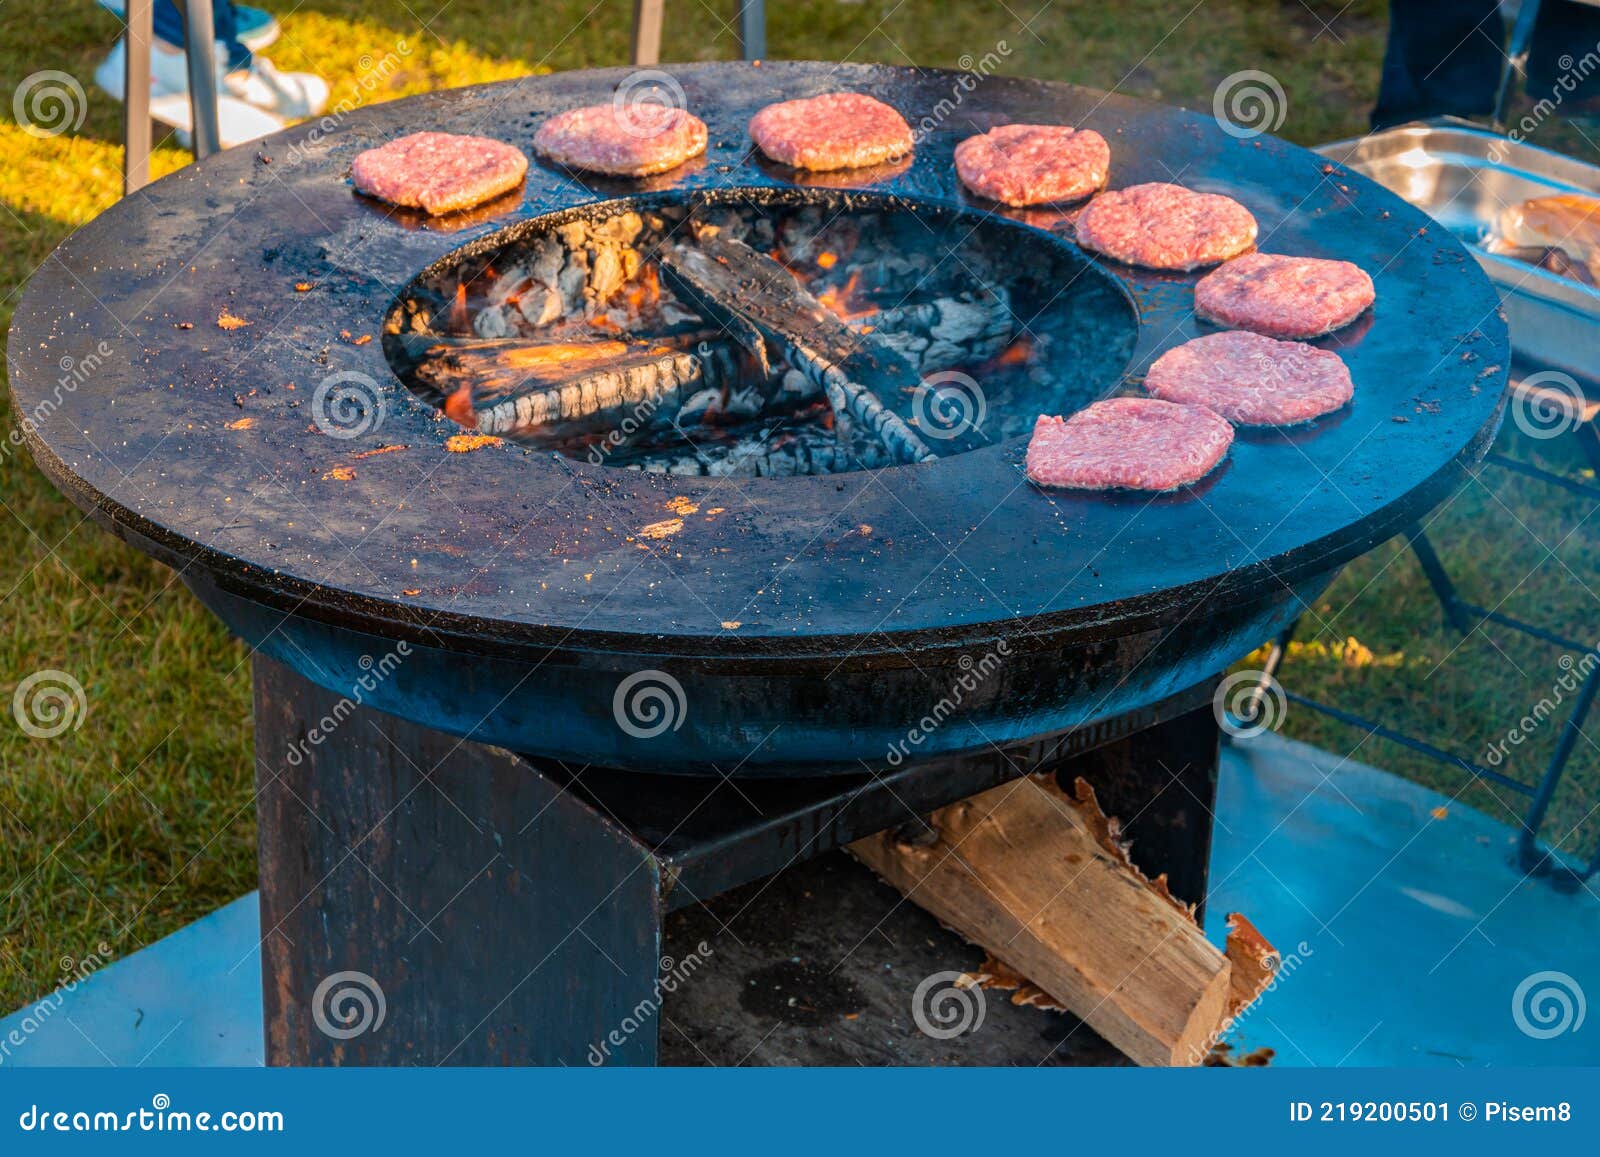 A Large Round Wood-burning Grill Image Image of 219200501